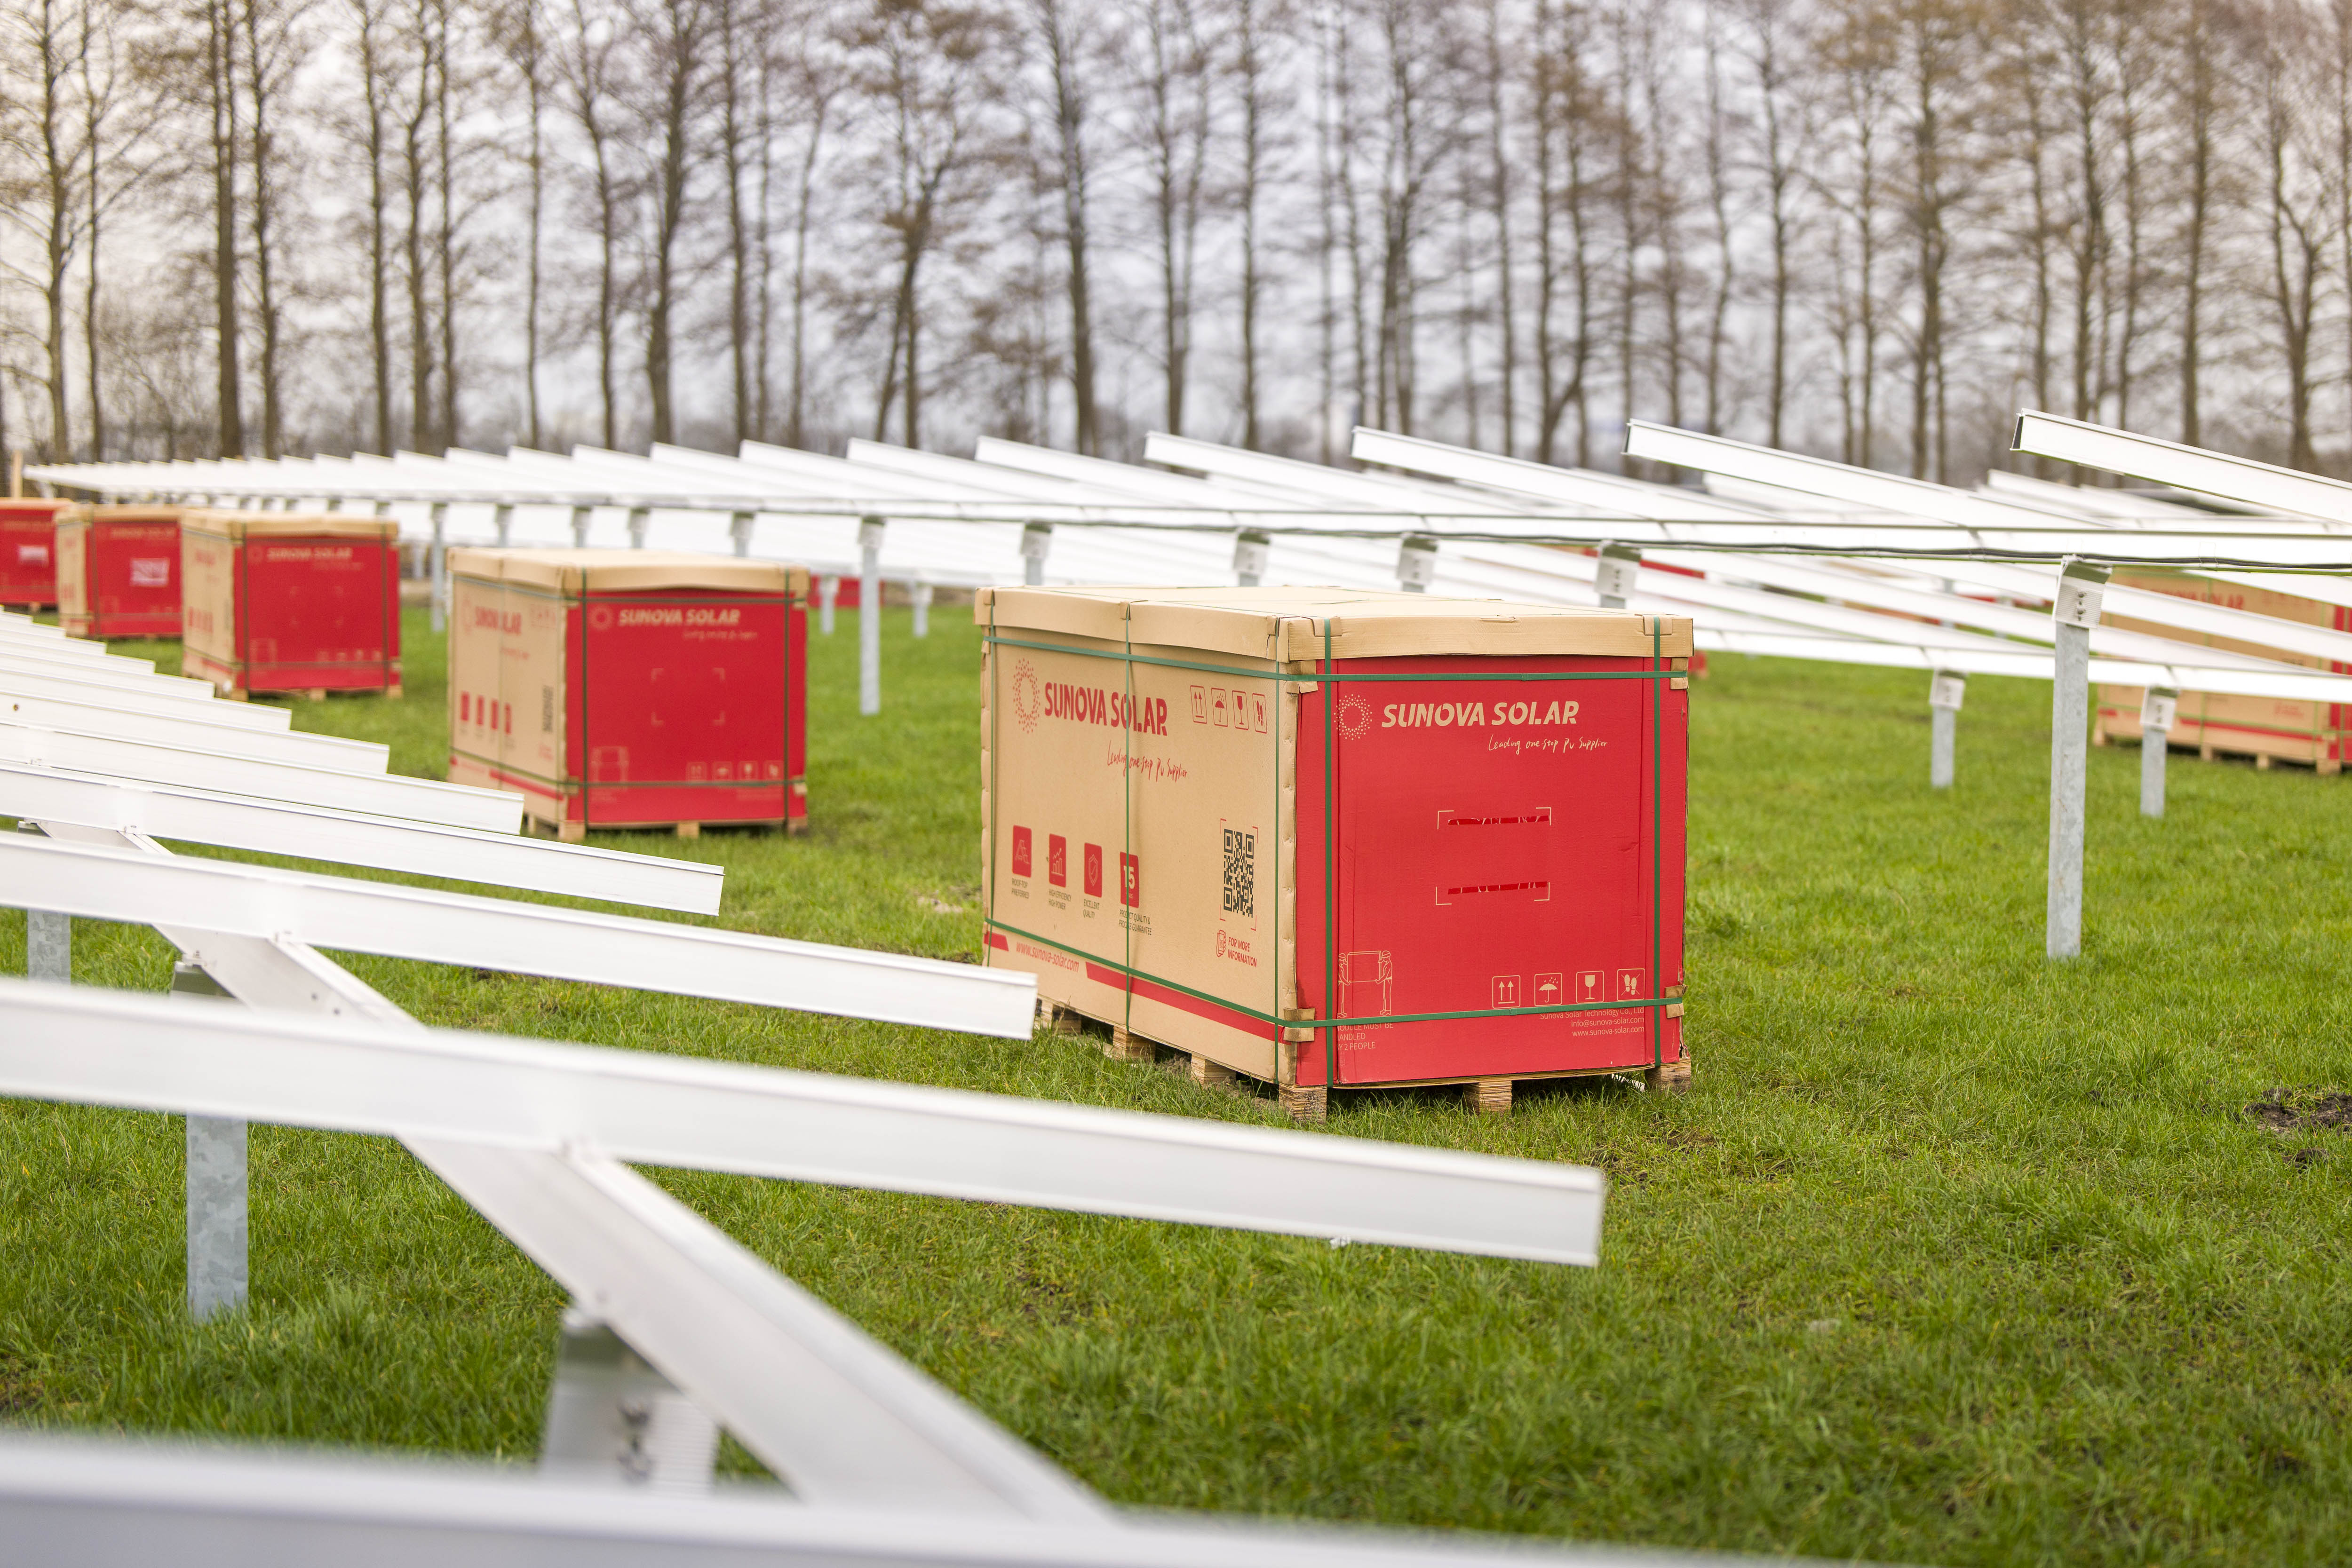 Nearly 51,000 Sunova Solar modules are installed in Wanneperveen solar park.